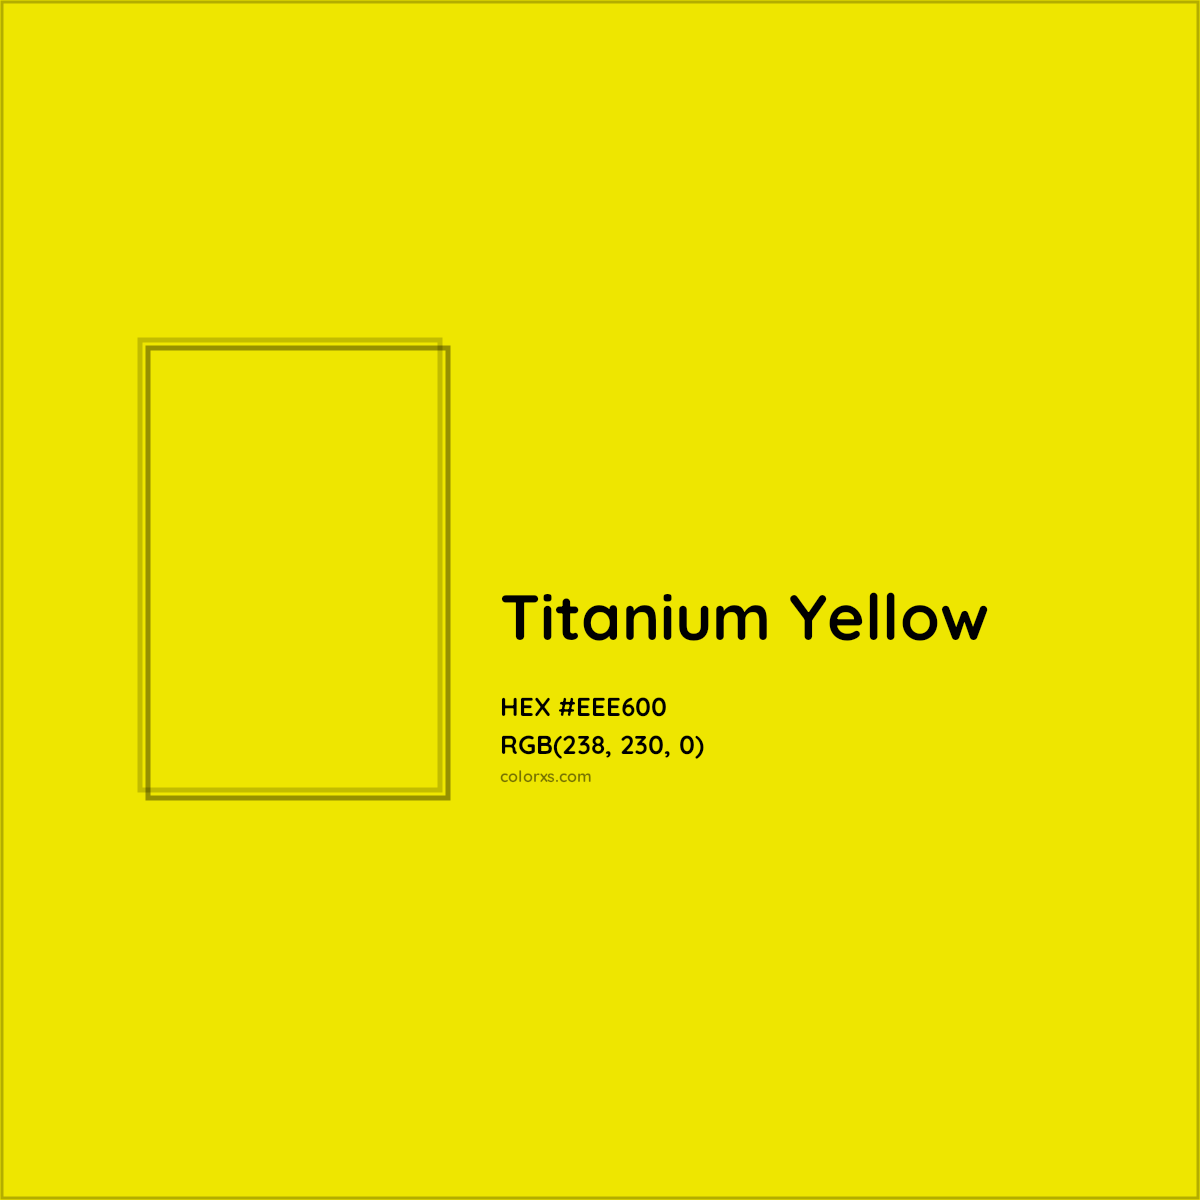 HEX #EEE600 Titanium Yellow Color - Color Code